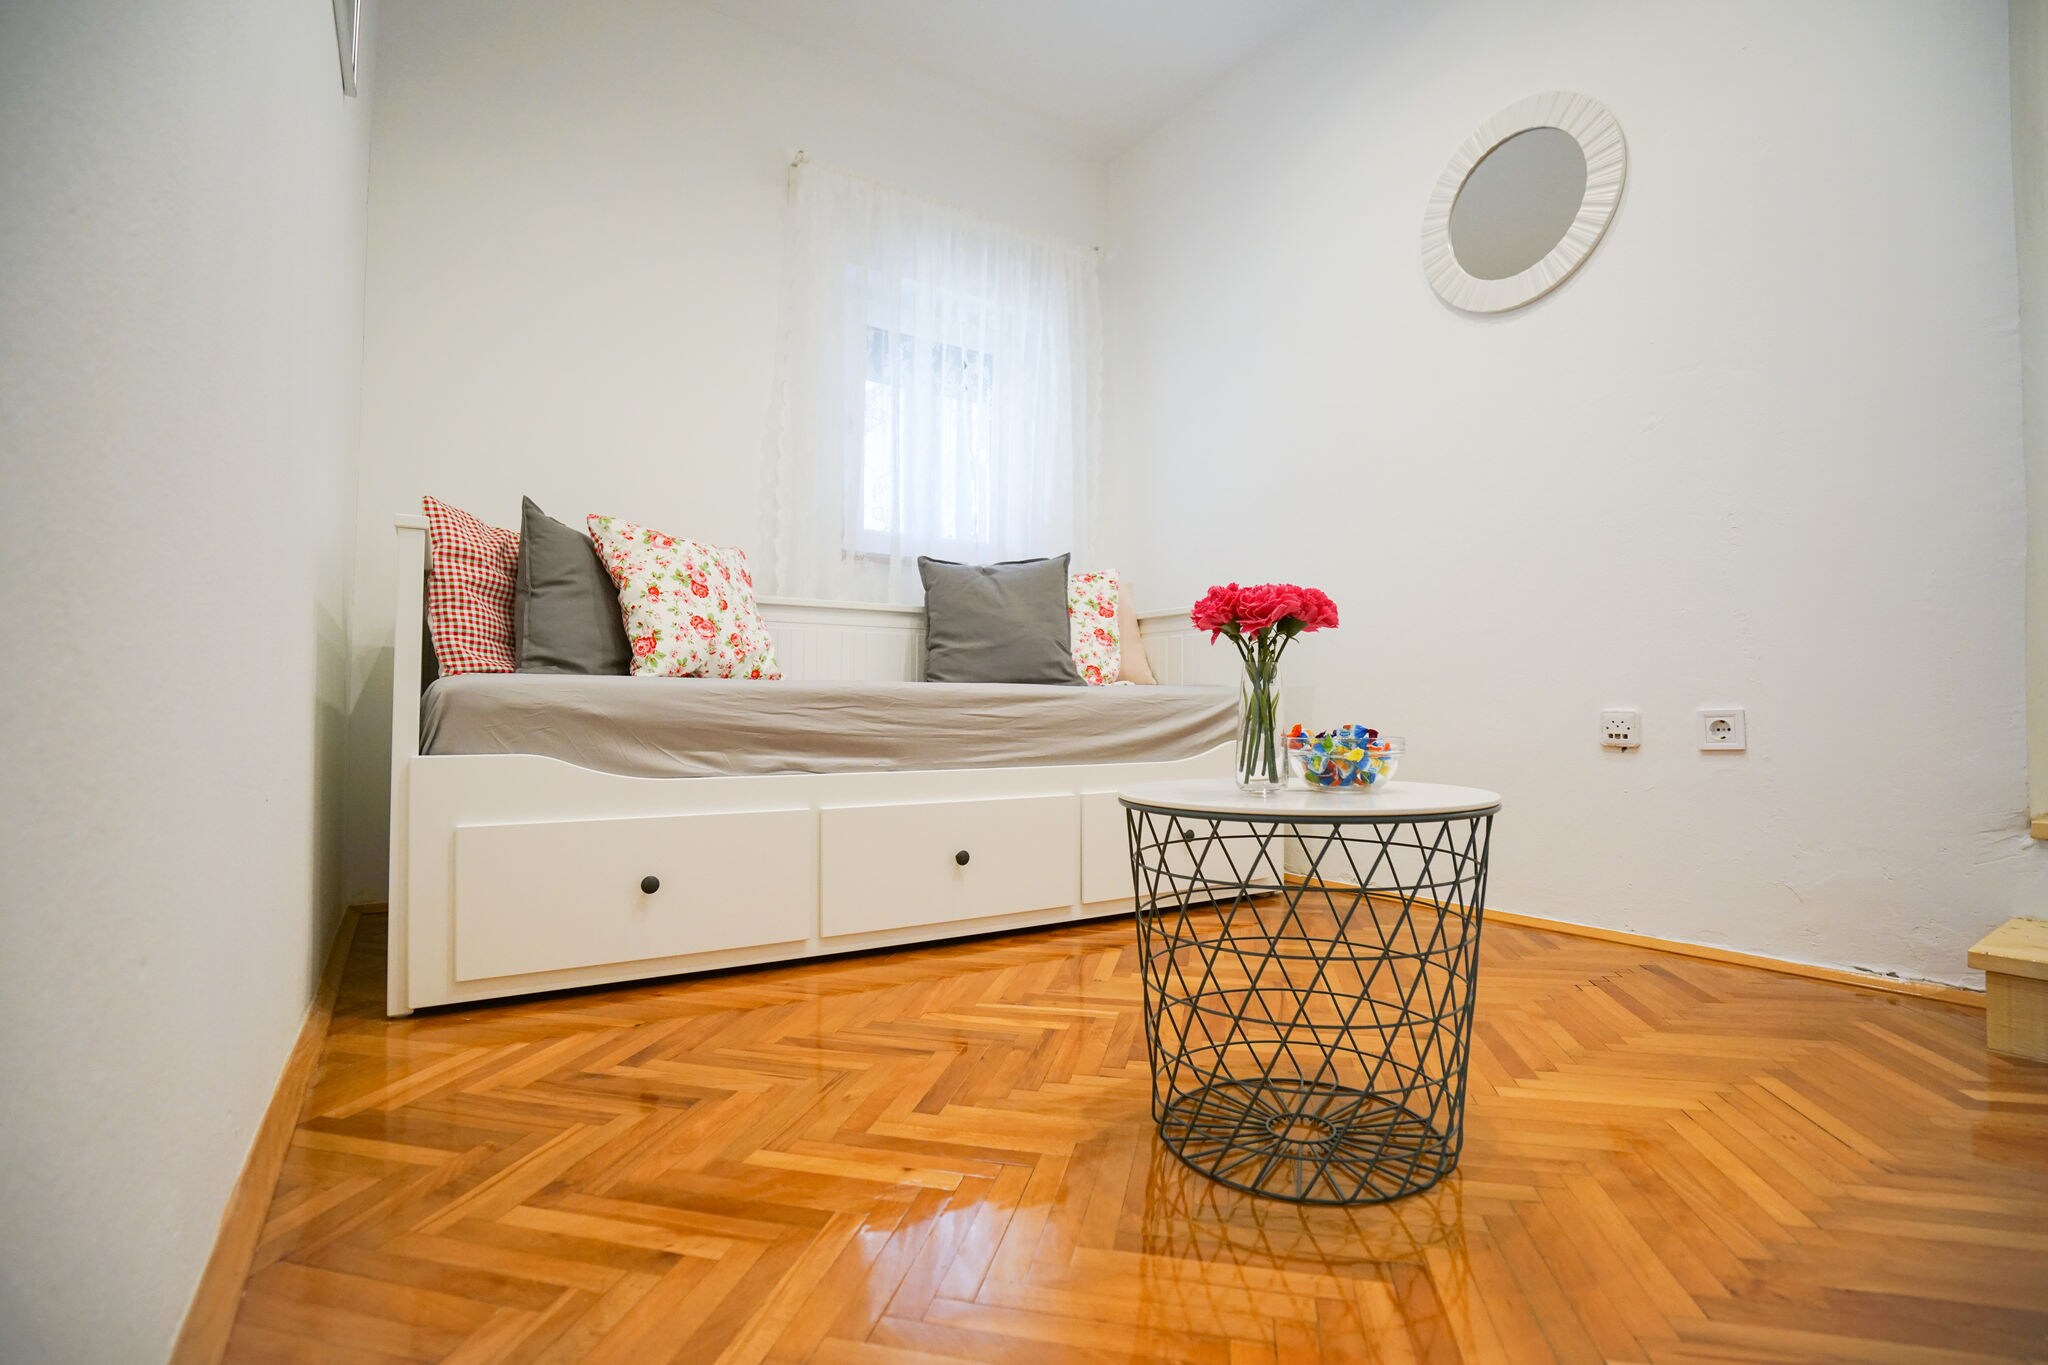 Modern, licht appartement met eigen terras, 2, 5km vanaf de oude stad Zadar